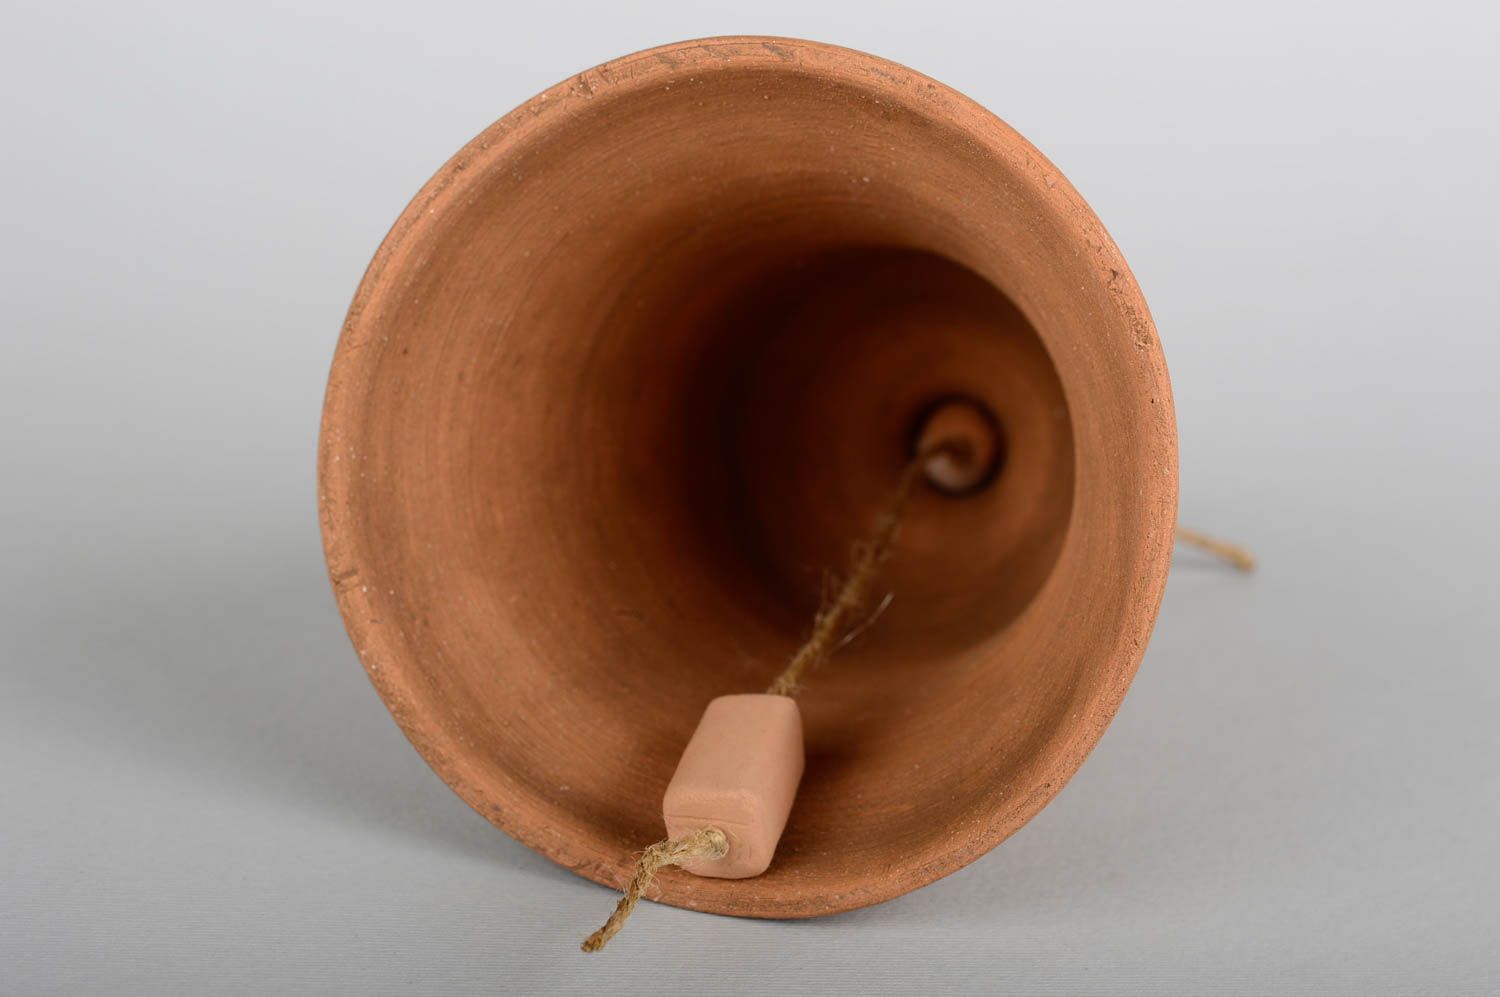 Handmade bell designer bell clay bell unusual souvenir ceramic bell gift ideas photo 4